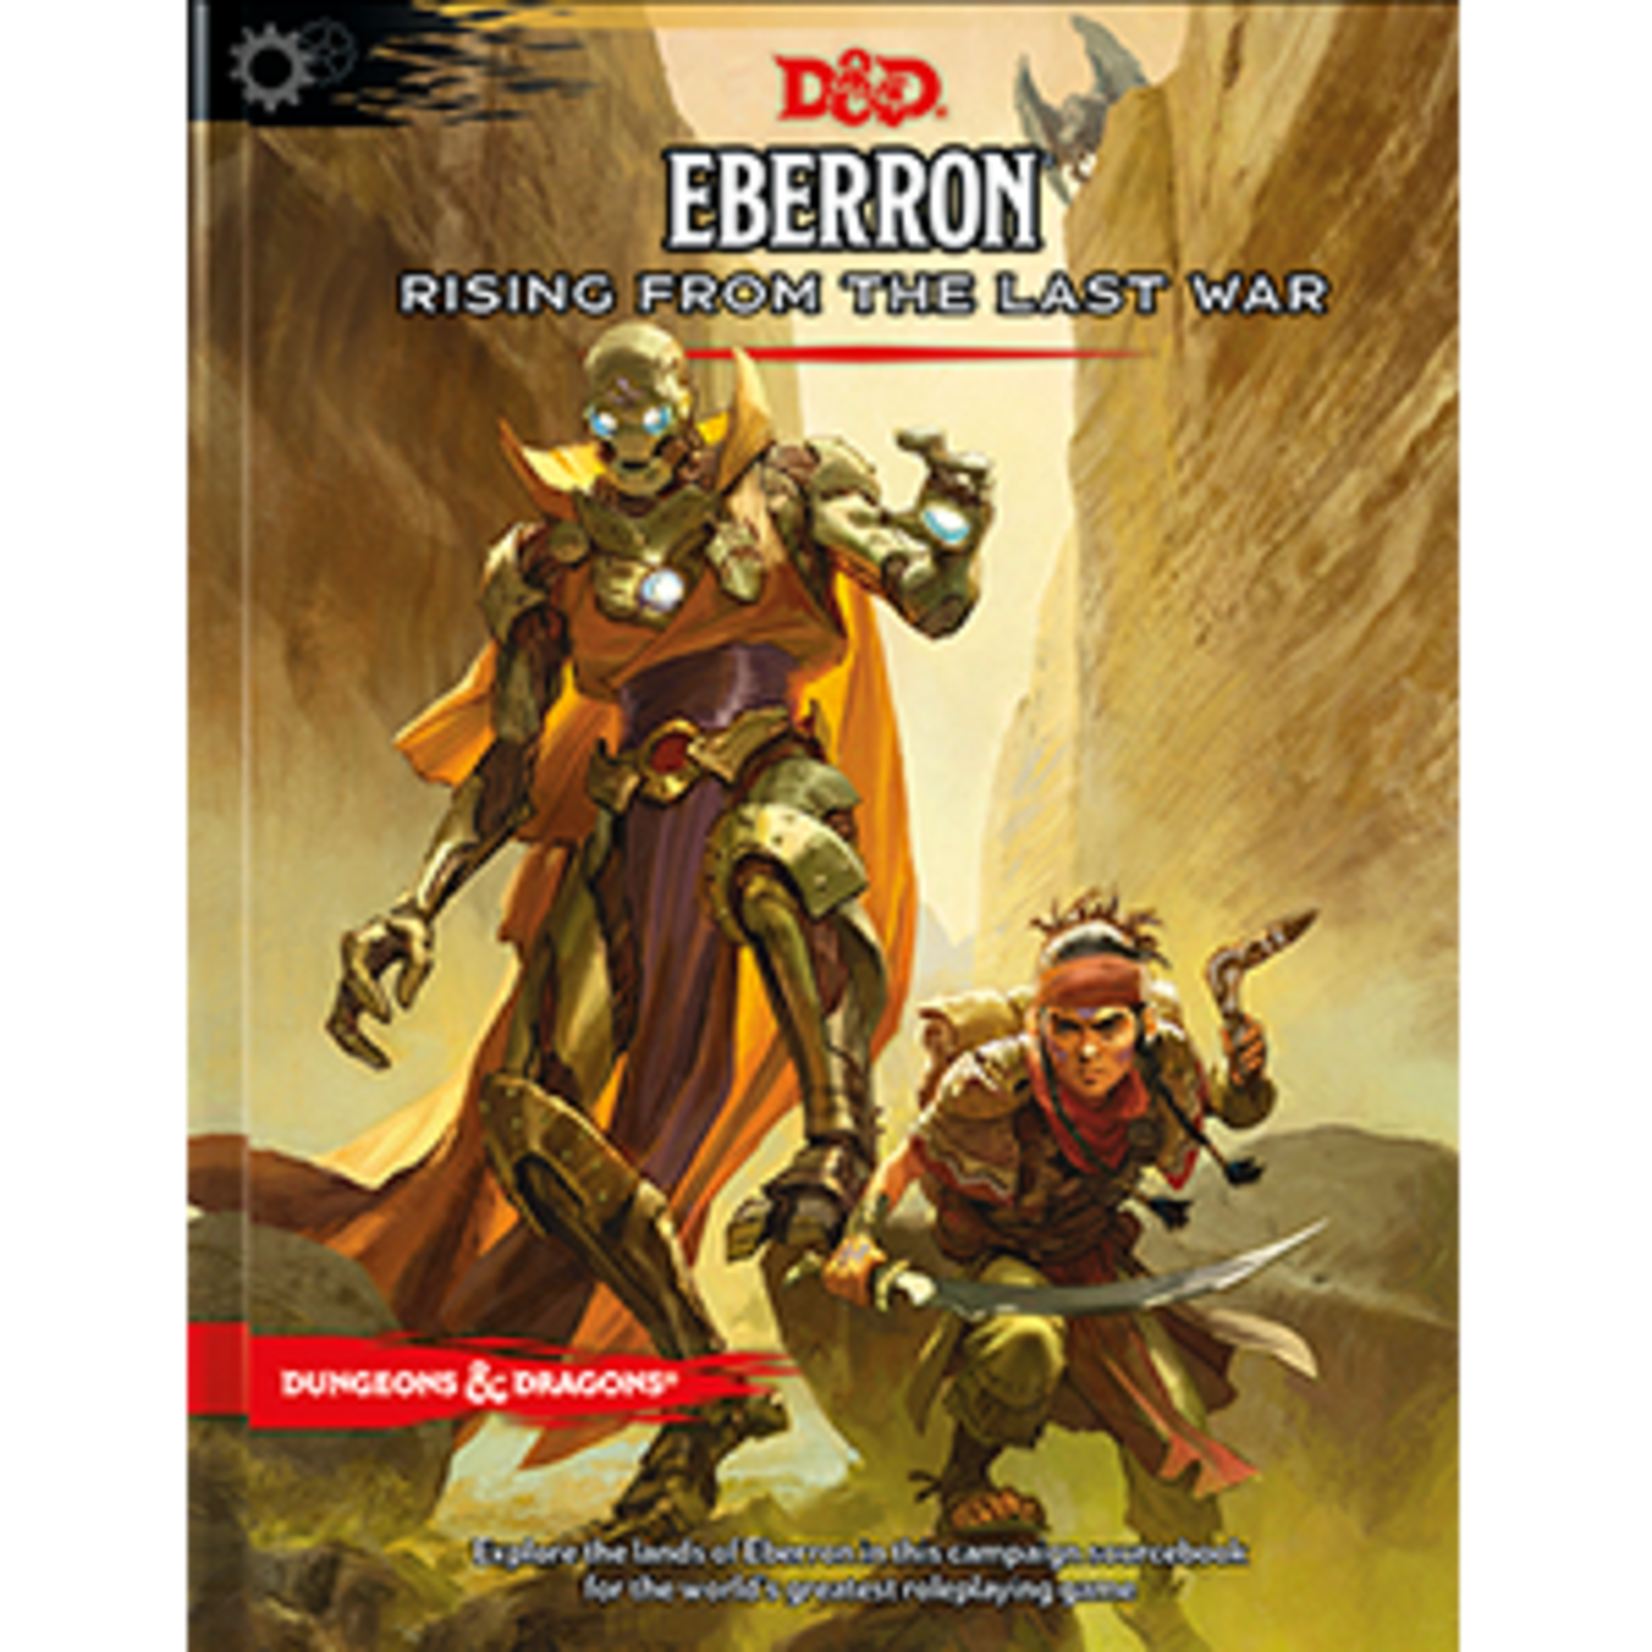 D&D: Eberron Rising from the Last War